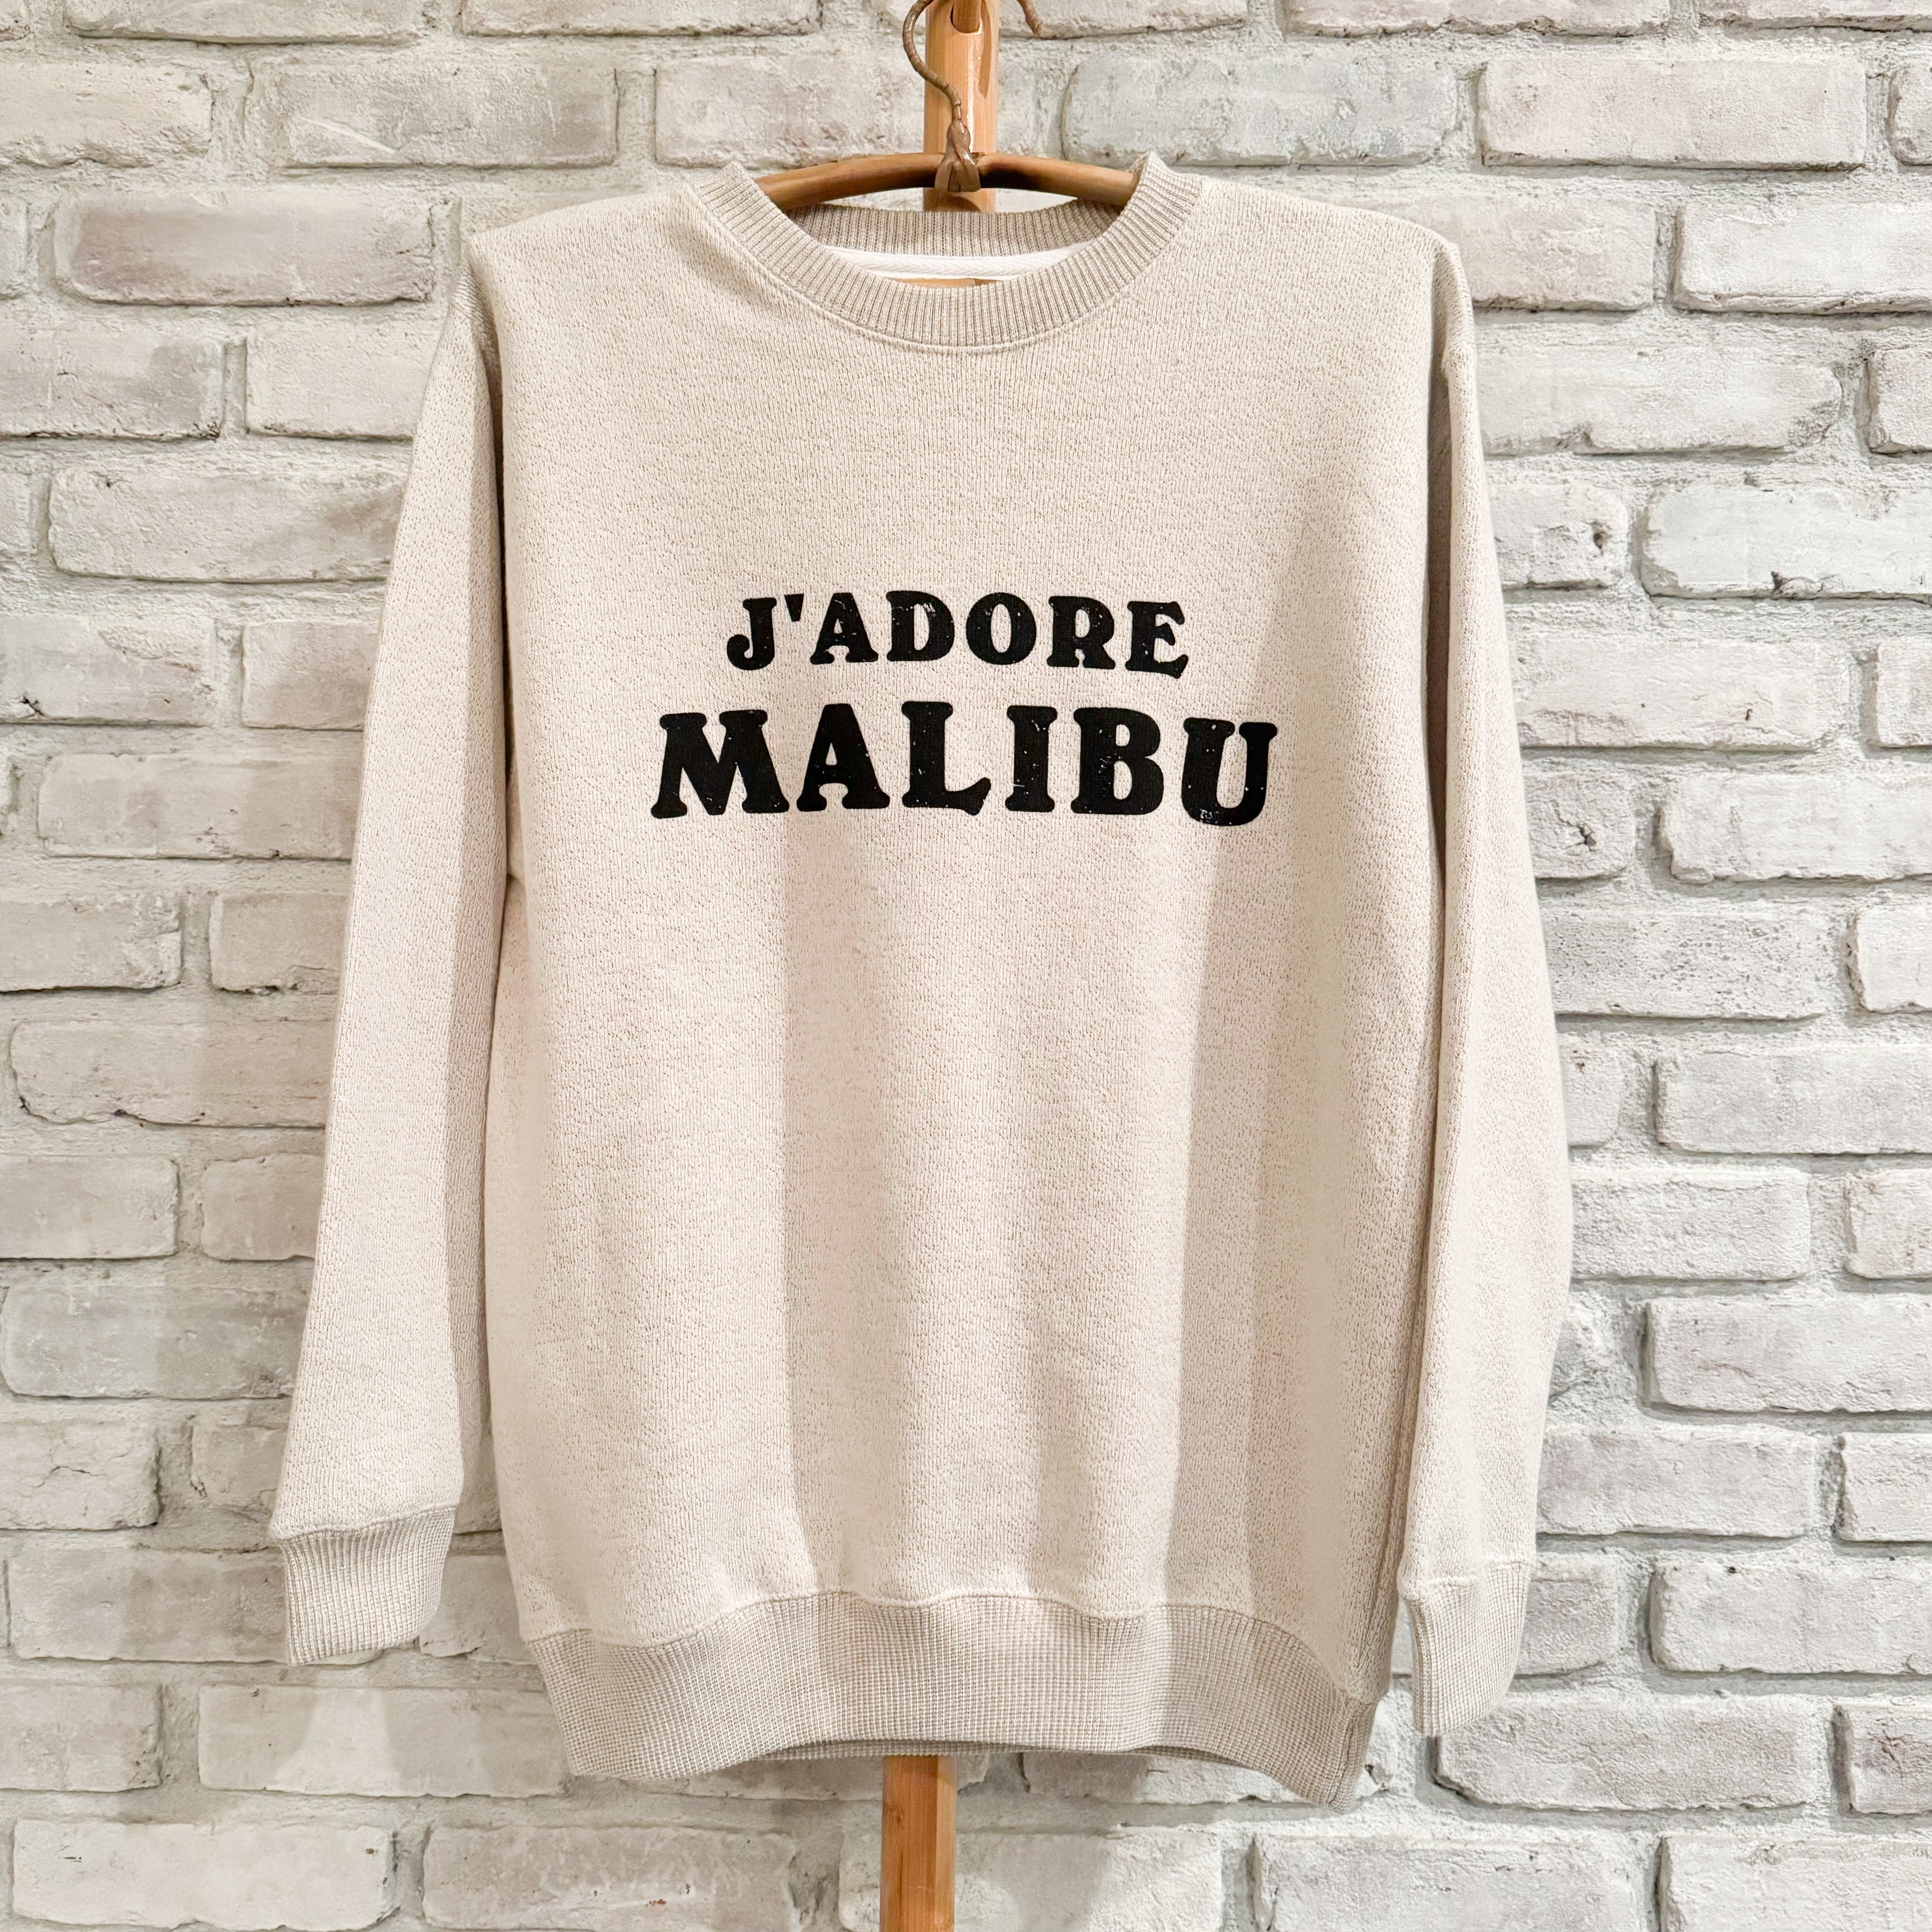 JADORE MALIBU SWEATSHIRTS